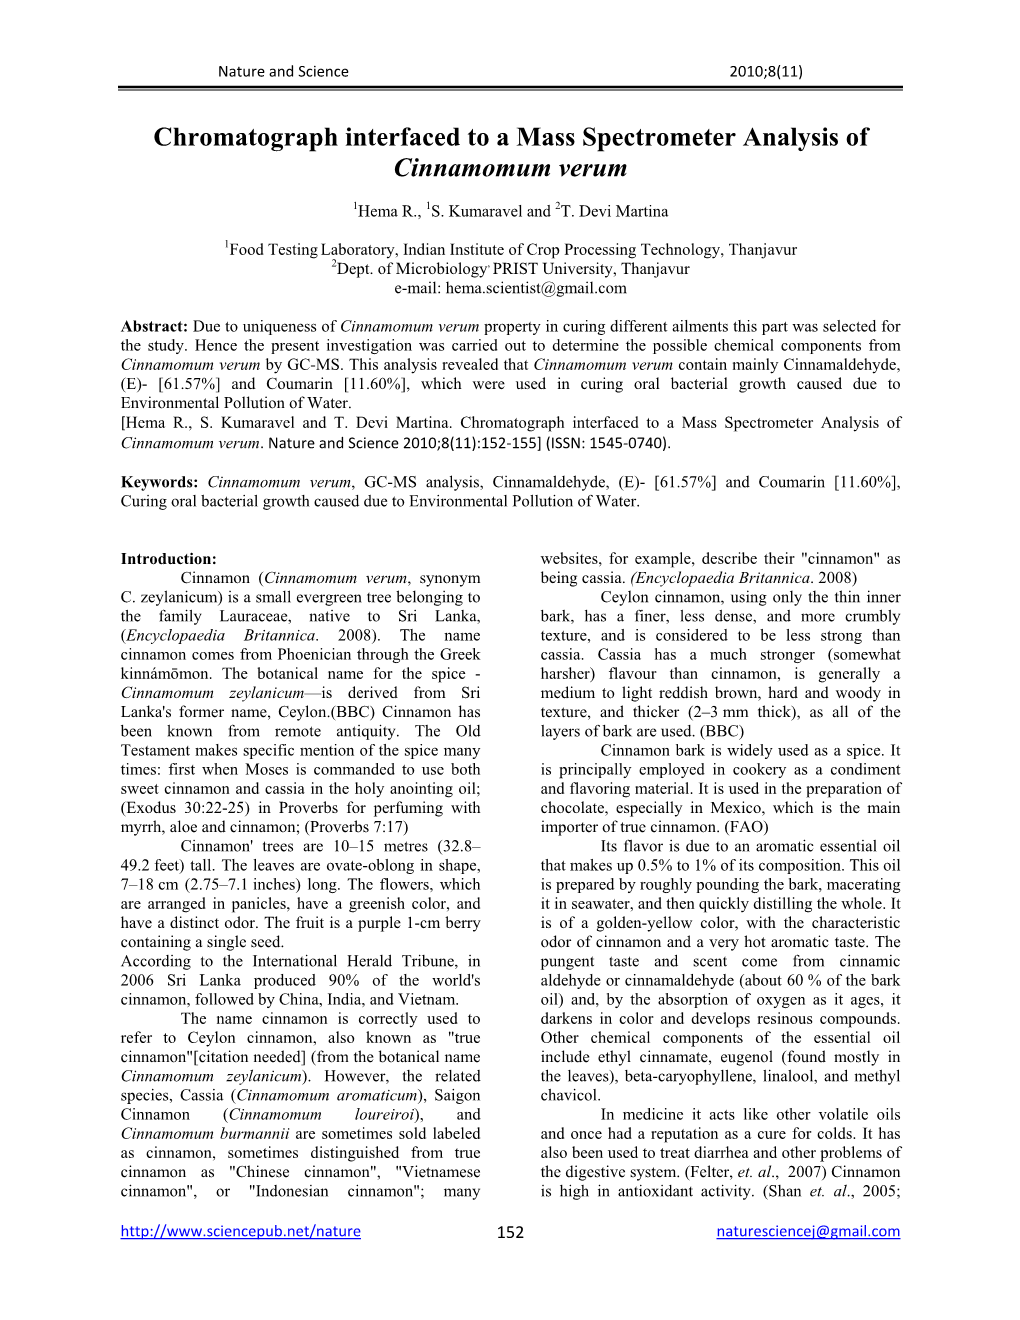 Chromatograph Interfaced to a Mass Spectrometer Analysis of Cinnamomum Verum